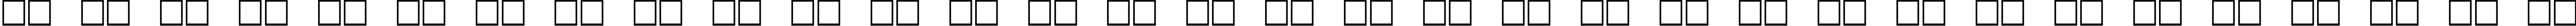 Пример написания русского алфавита шрифтом Cheq